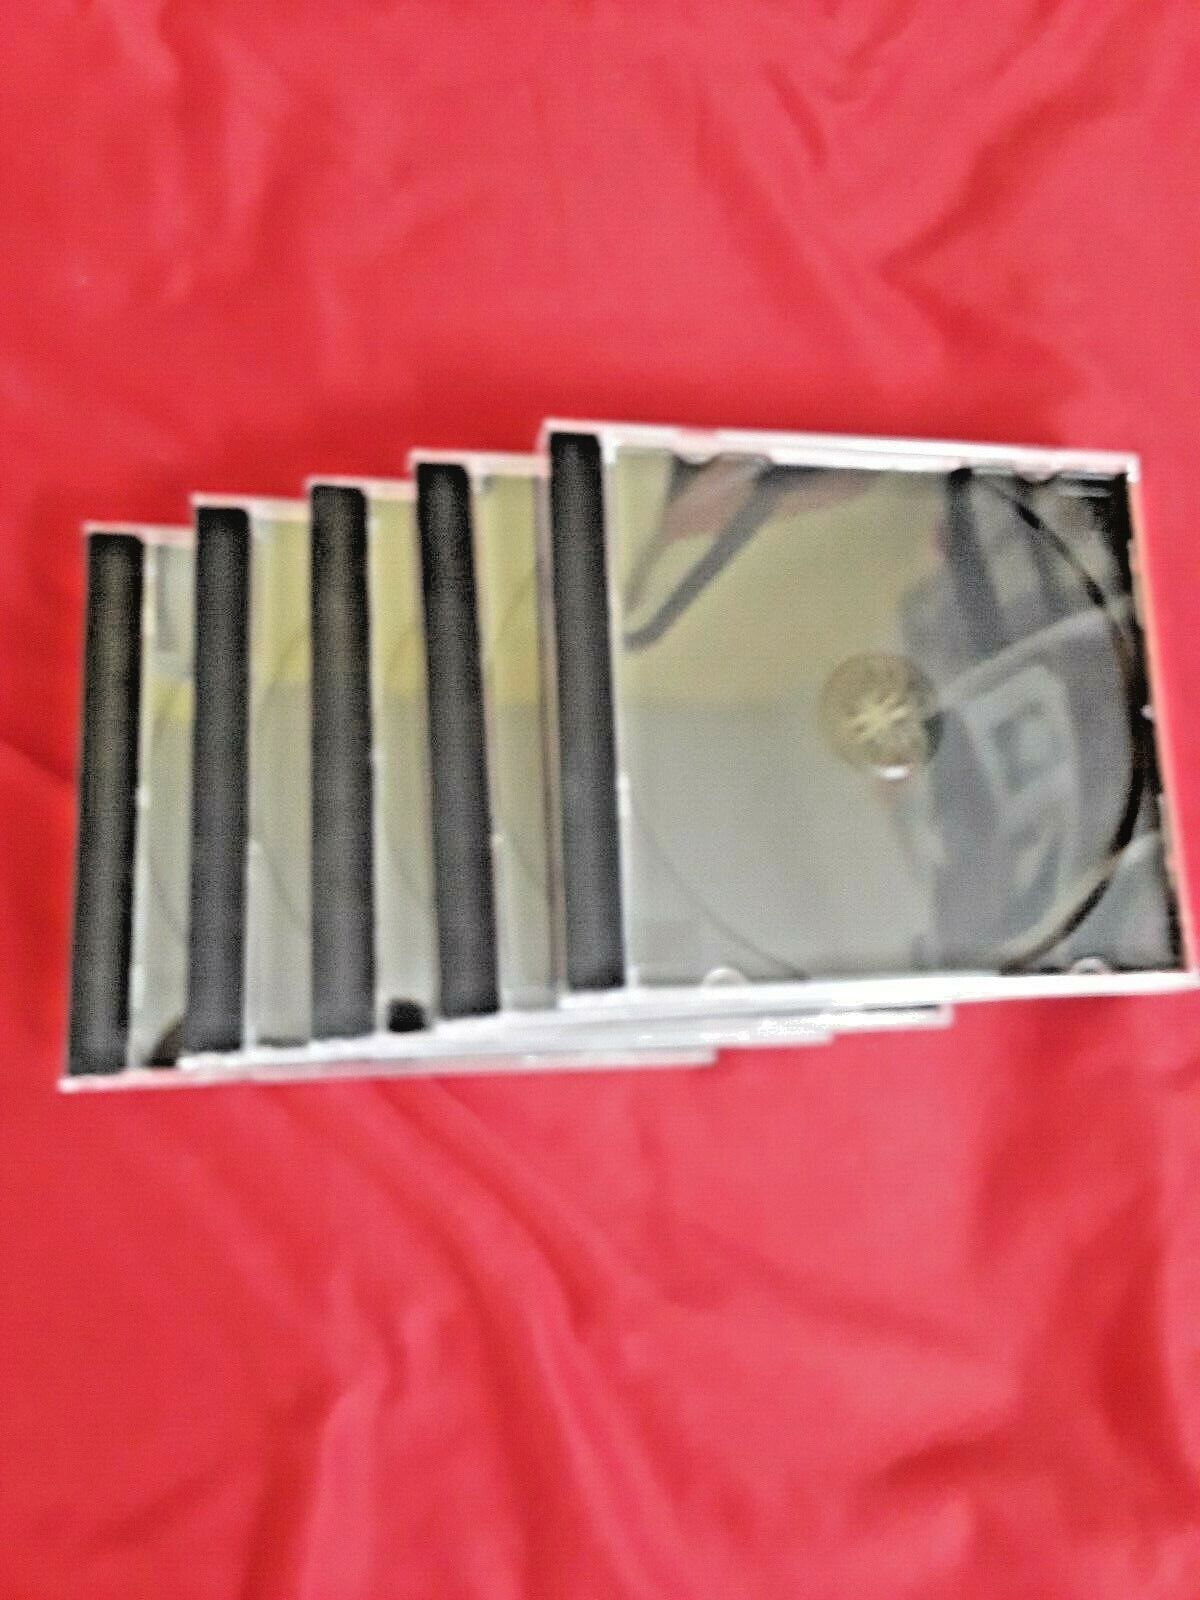 5 Standard 10.4mm Single CD DVD Assembled Black Jewel Case Box